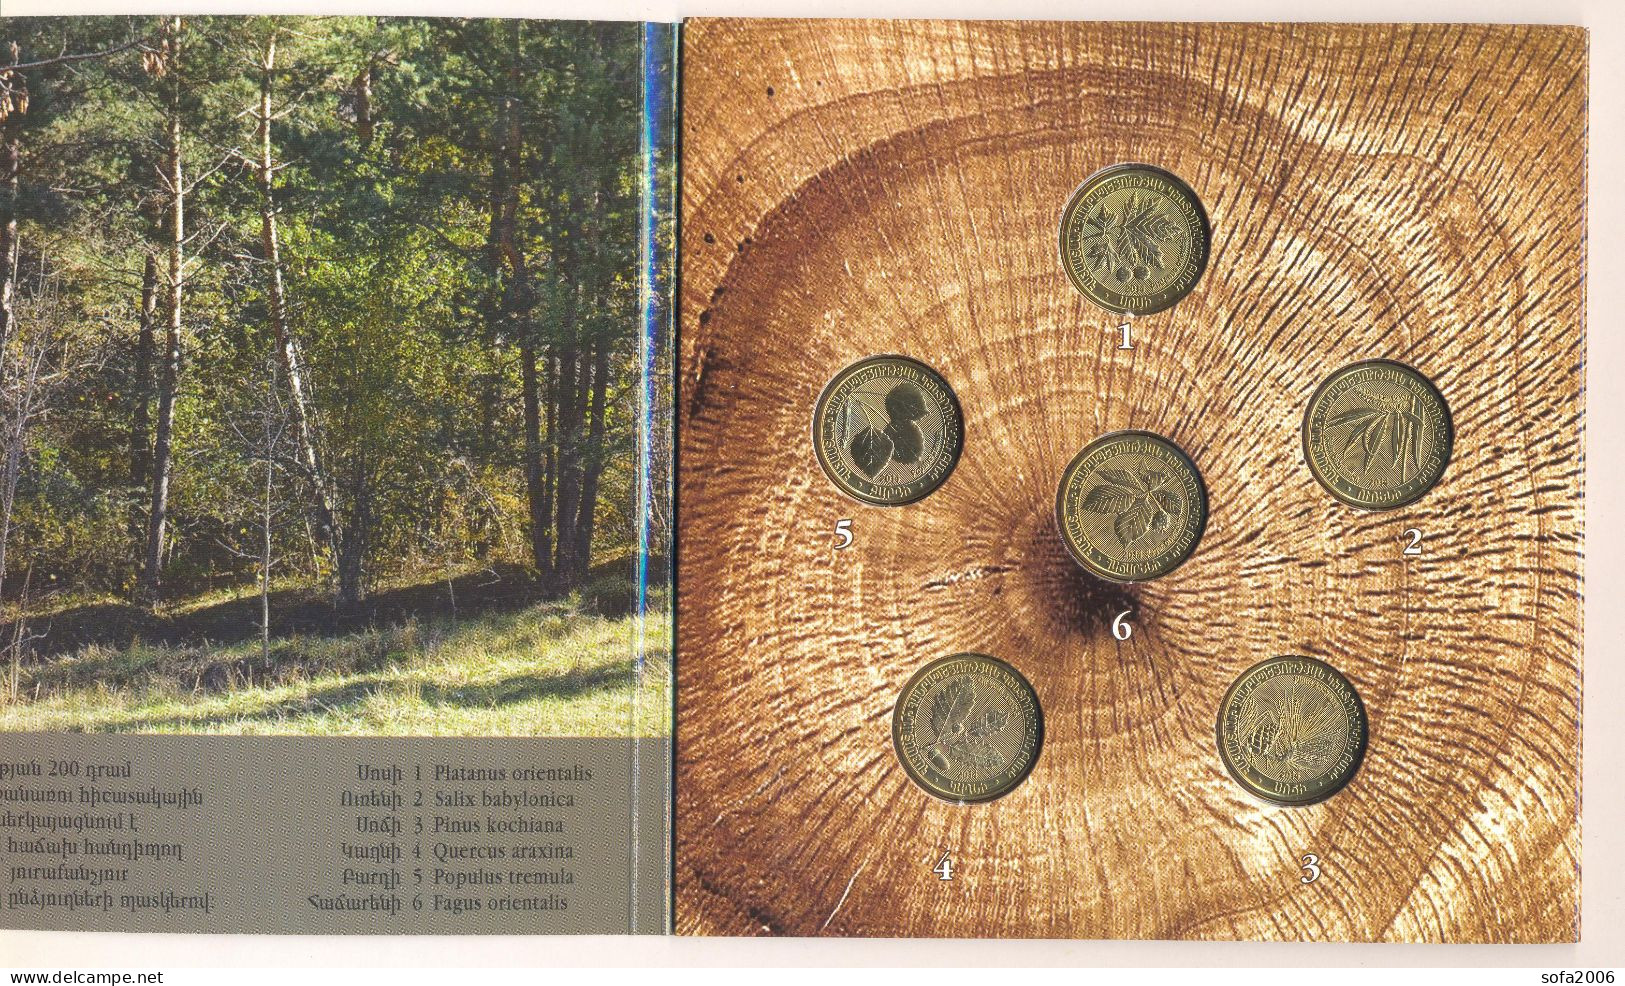 Armenia 2014, Wild Trees, Commemorative 200 Dram Coins, Booklet Cornet UNC - Arménie